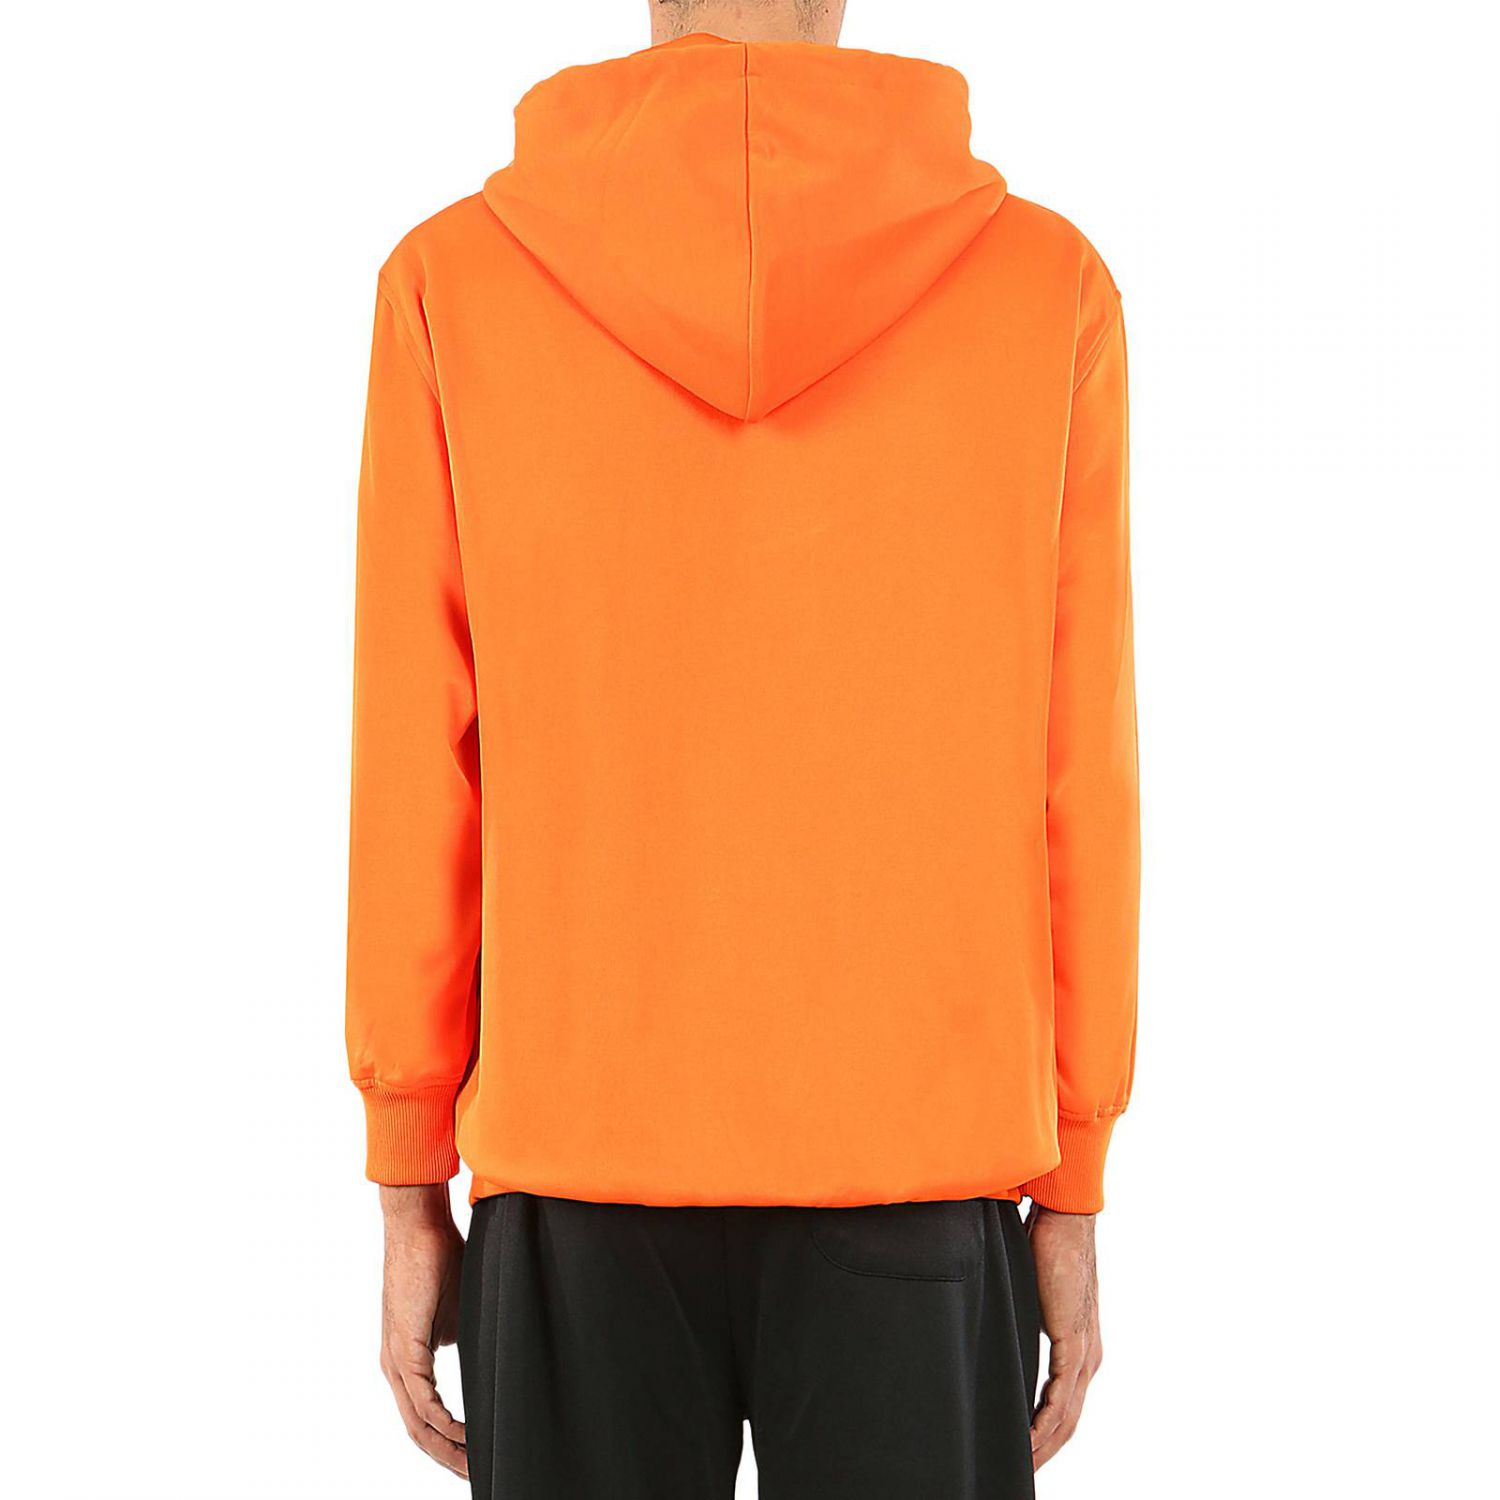 Lyst - Moschino Women's Sweater in Orange